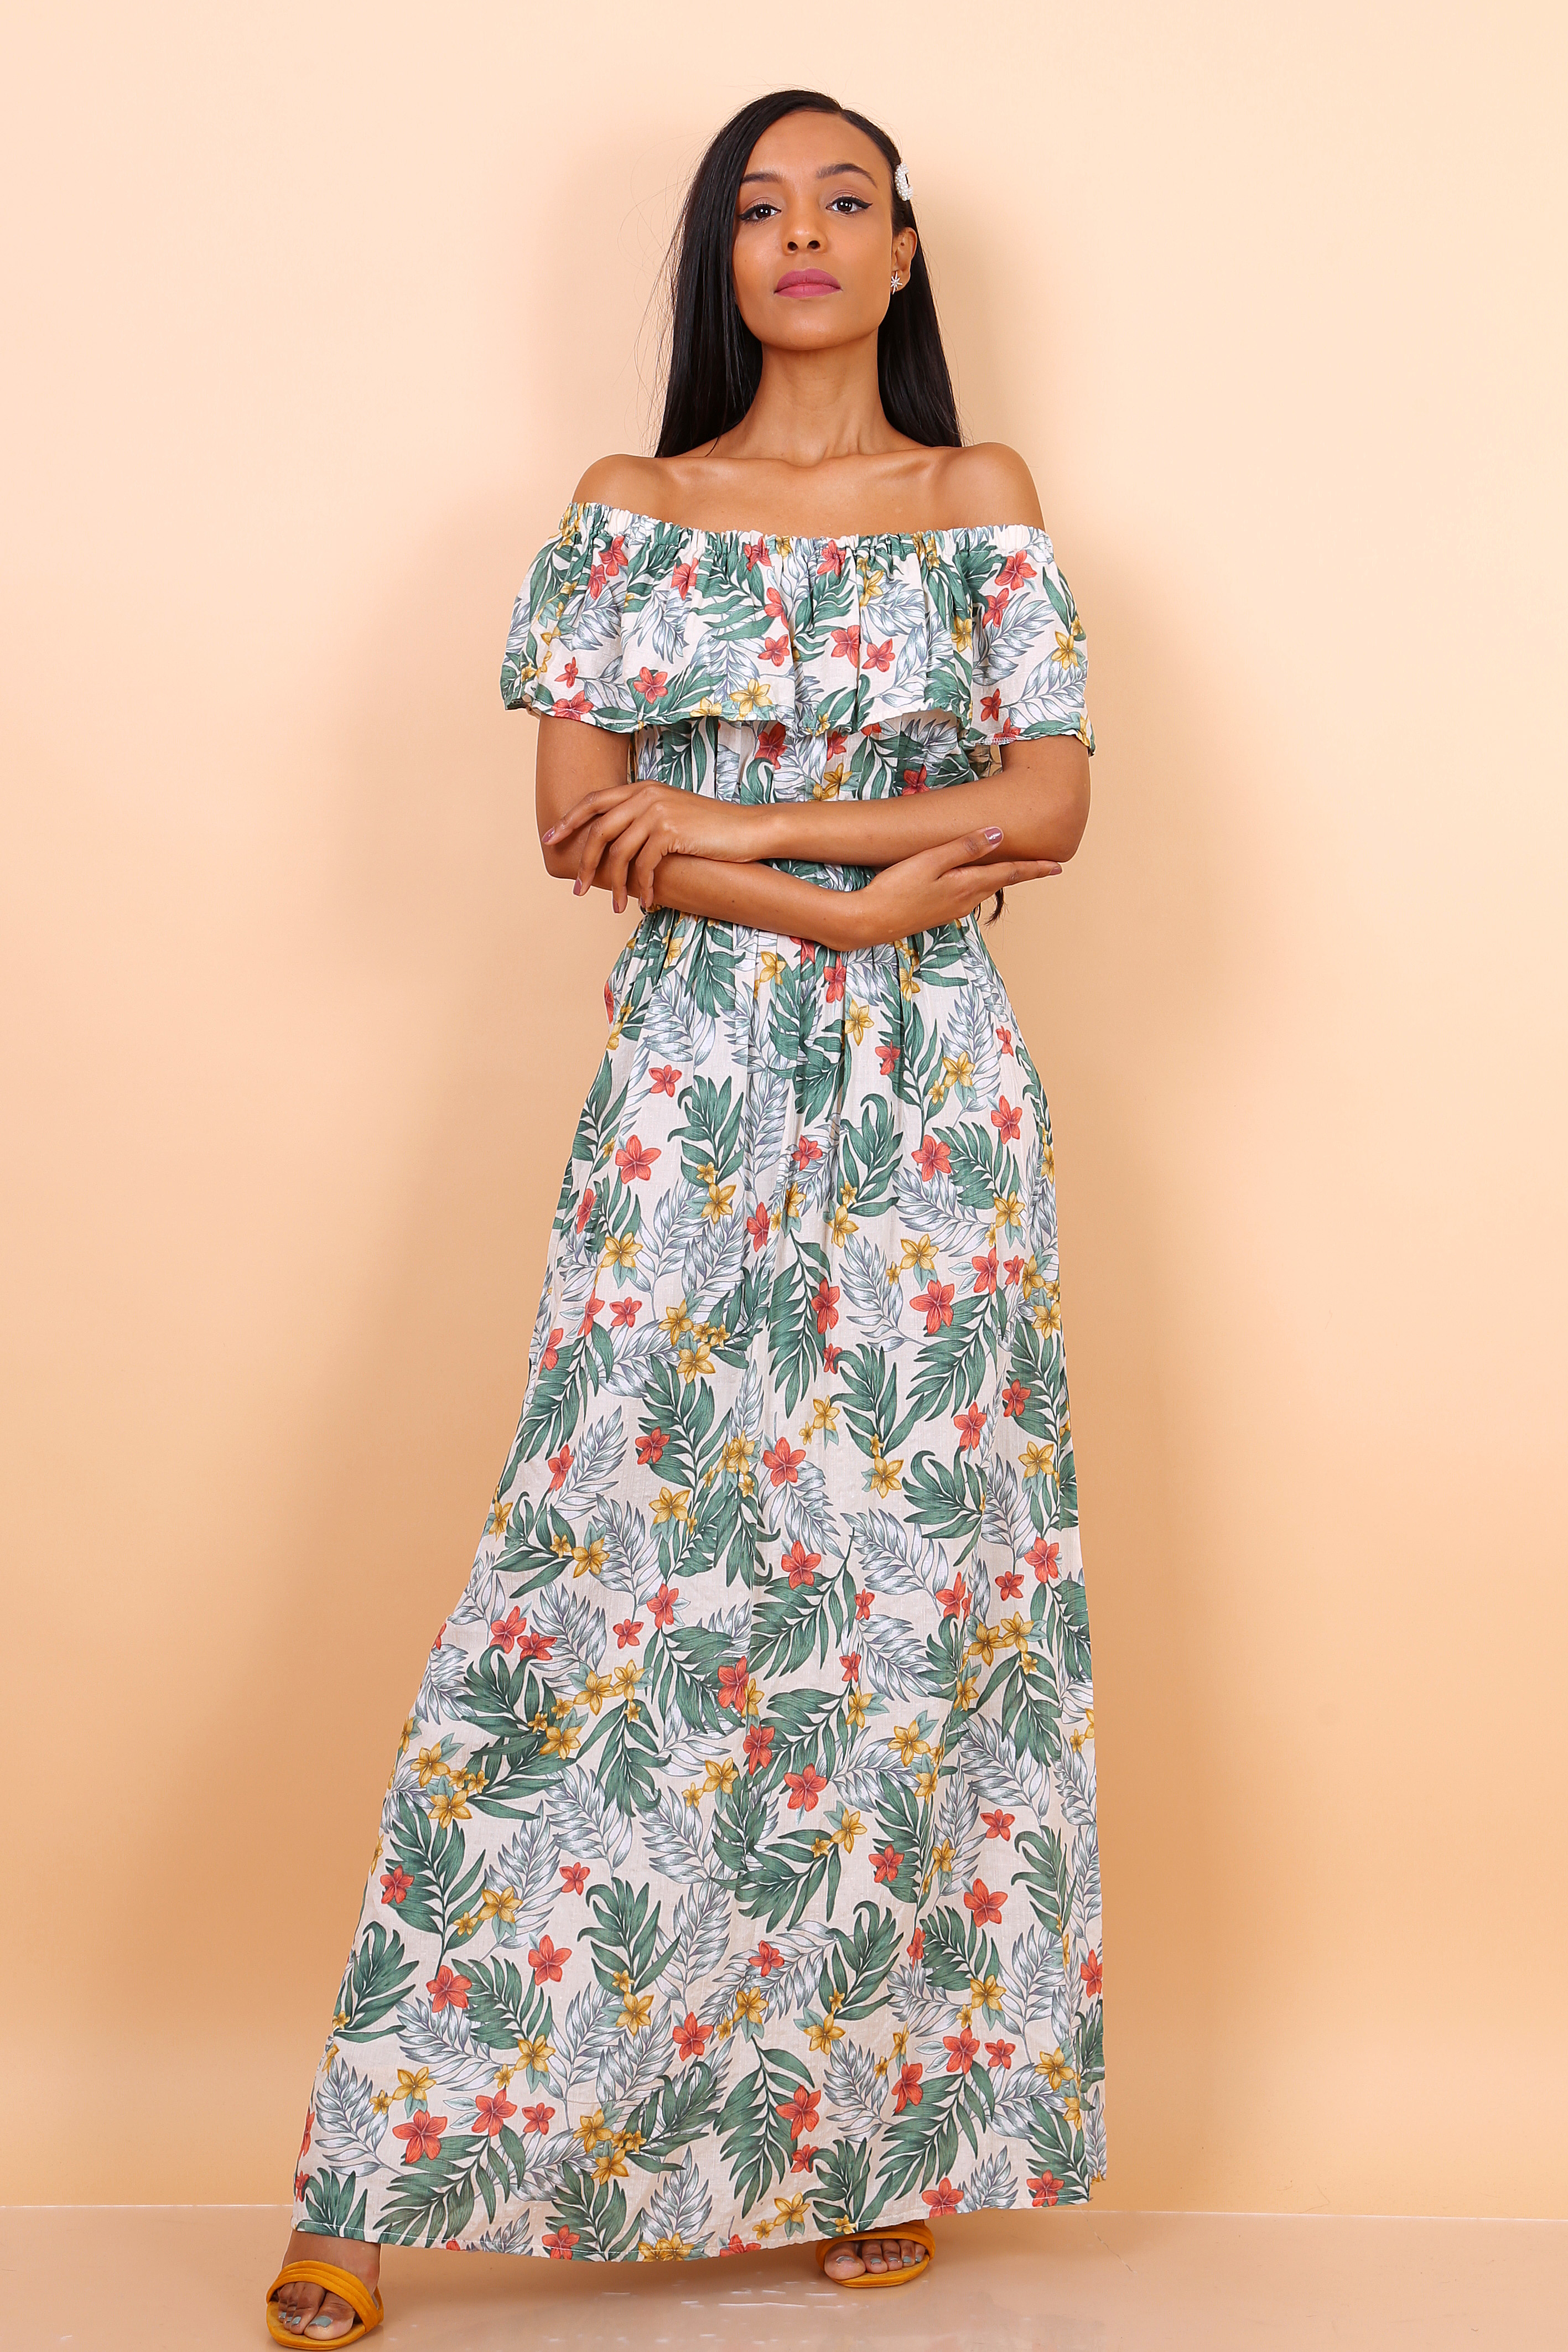 Fern Bardot Floral Maxi Dress